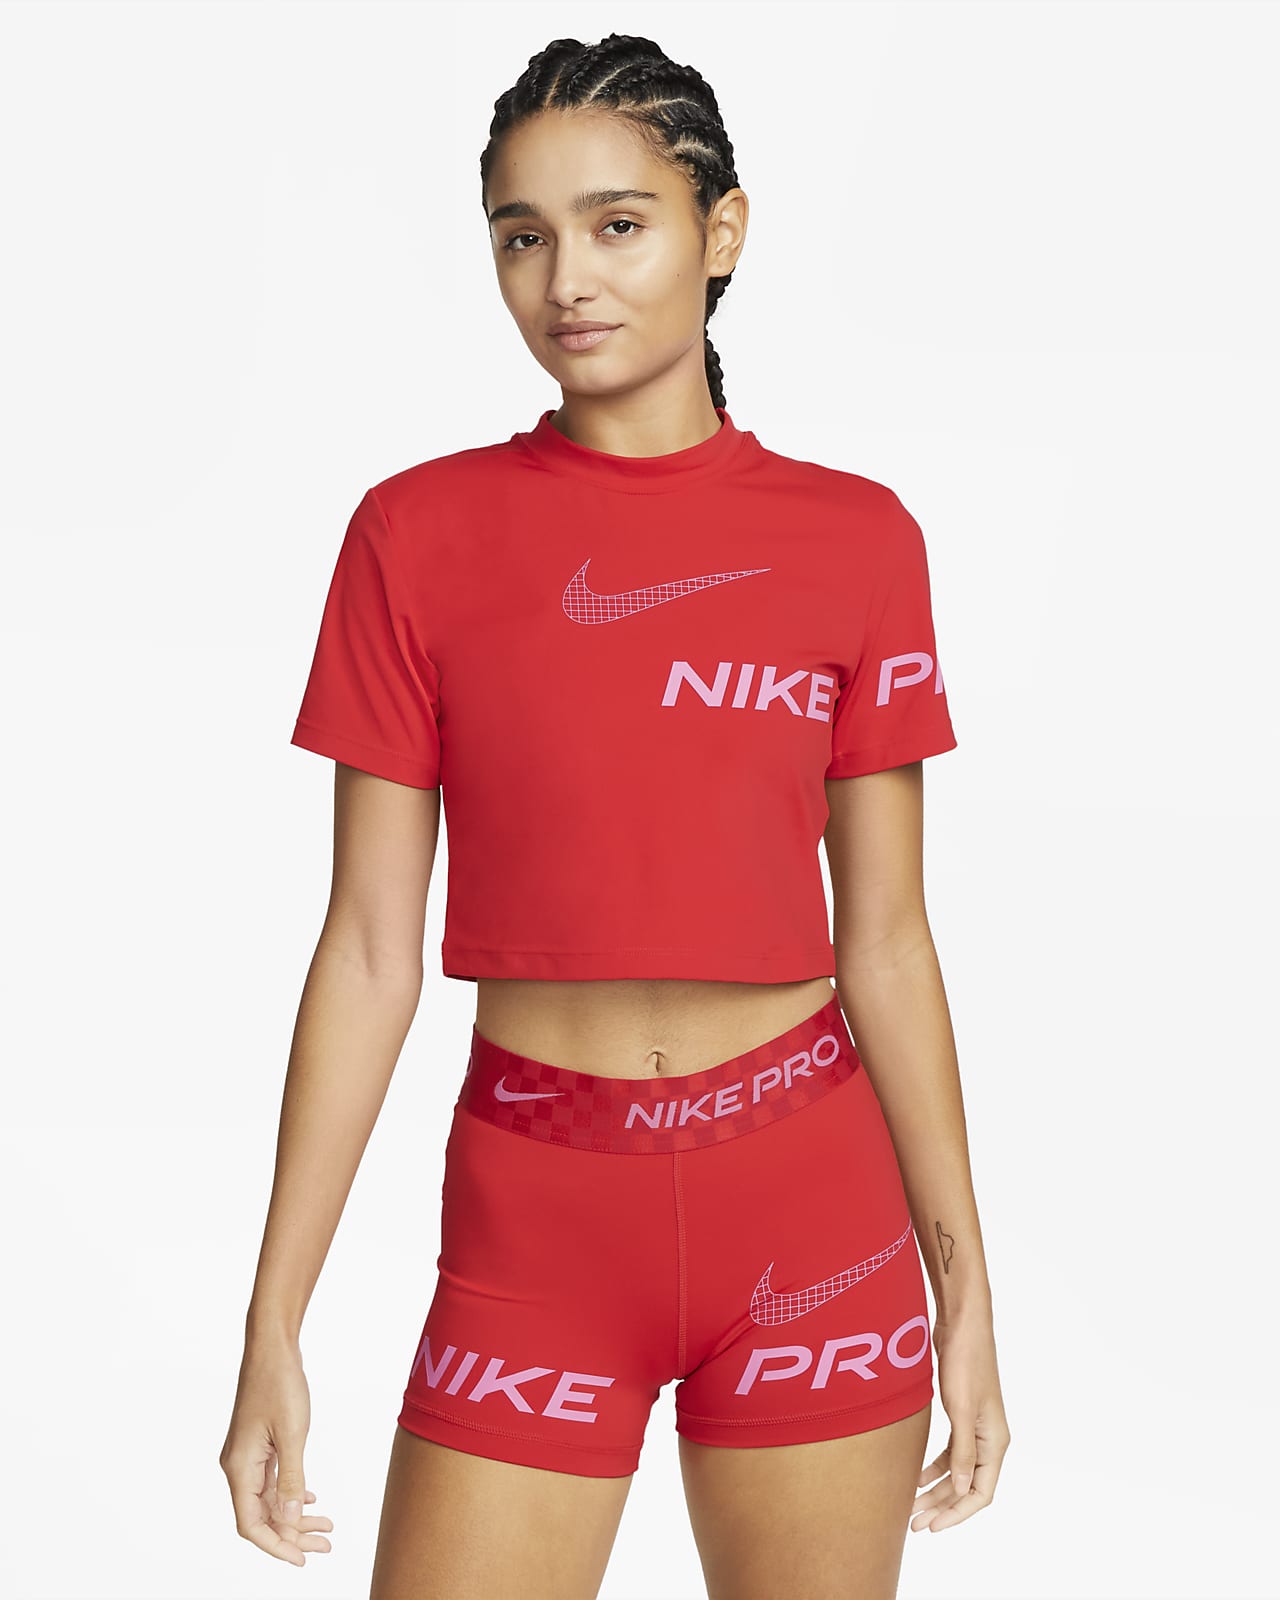 Nike Pro Shorts Tall Short Tight Red